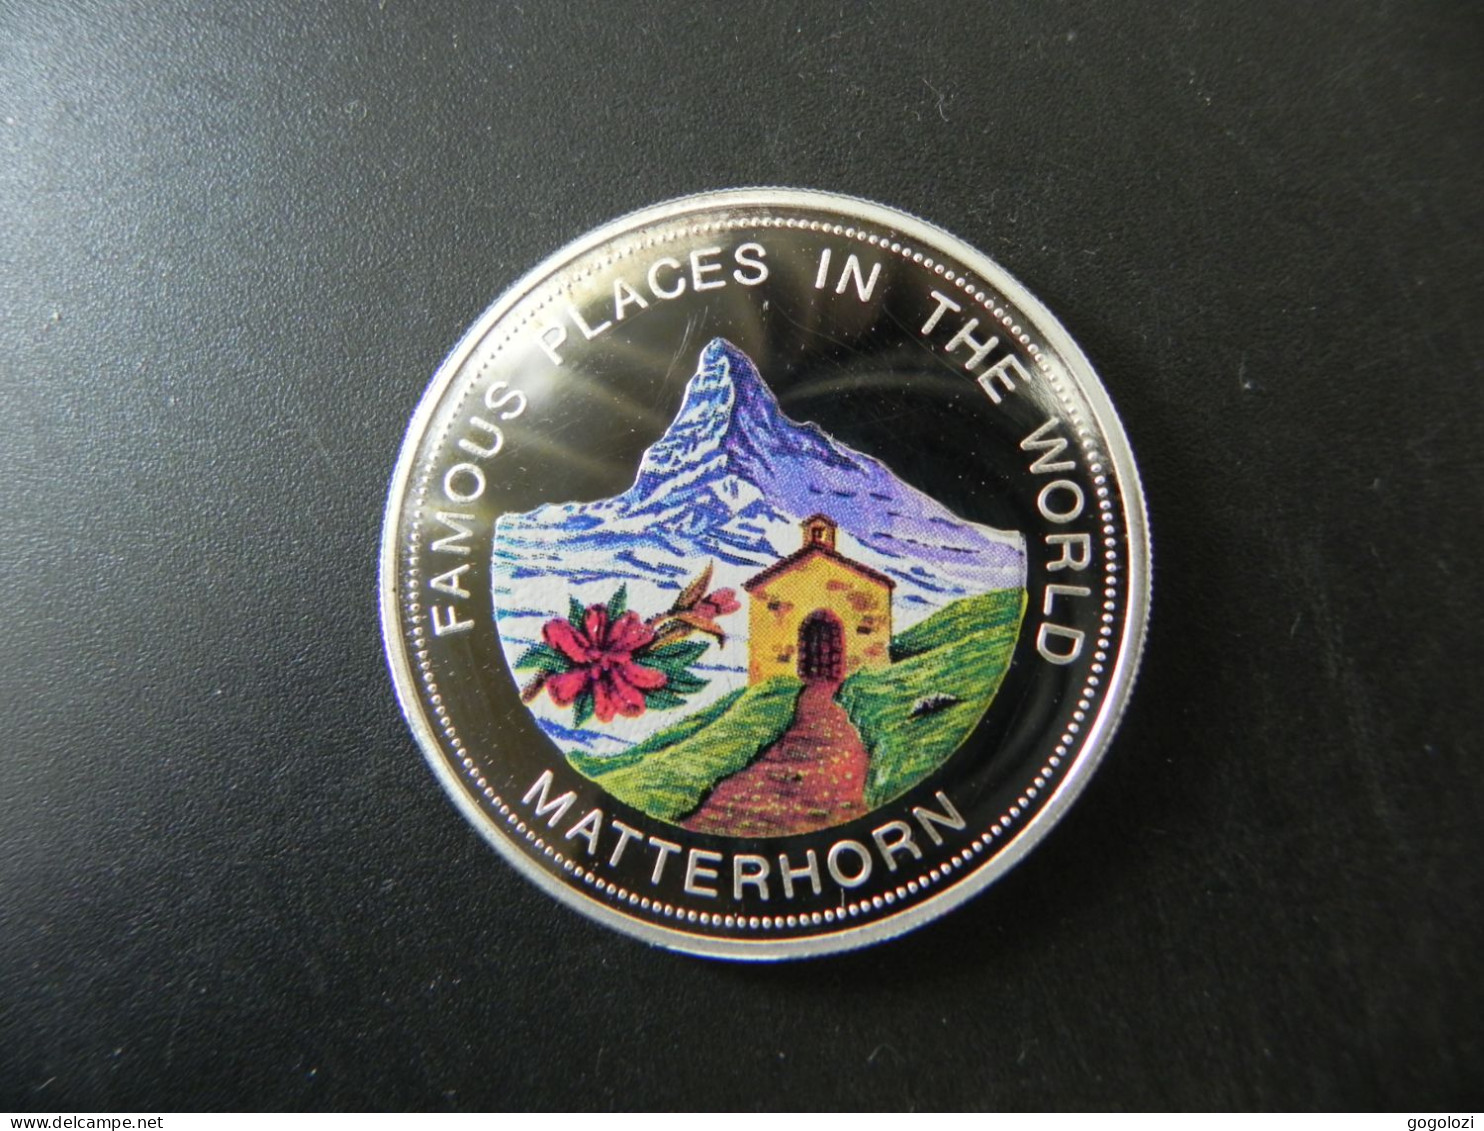 Uganda 2000 Shillings 1993 - Silver (0.999) 19.92 G - Famous Places In The World - Matterhorn - Ouganda